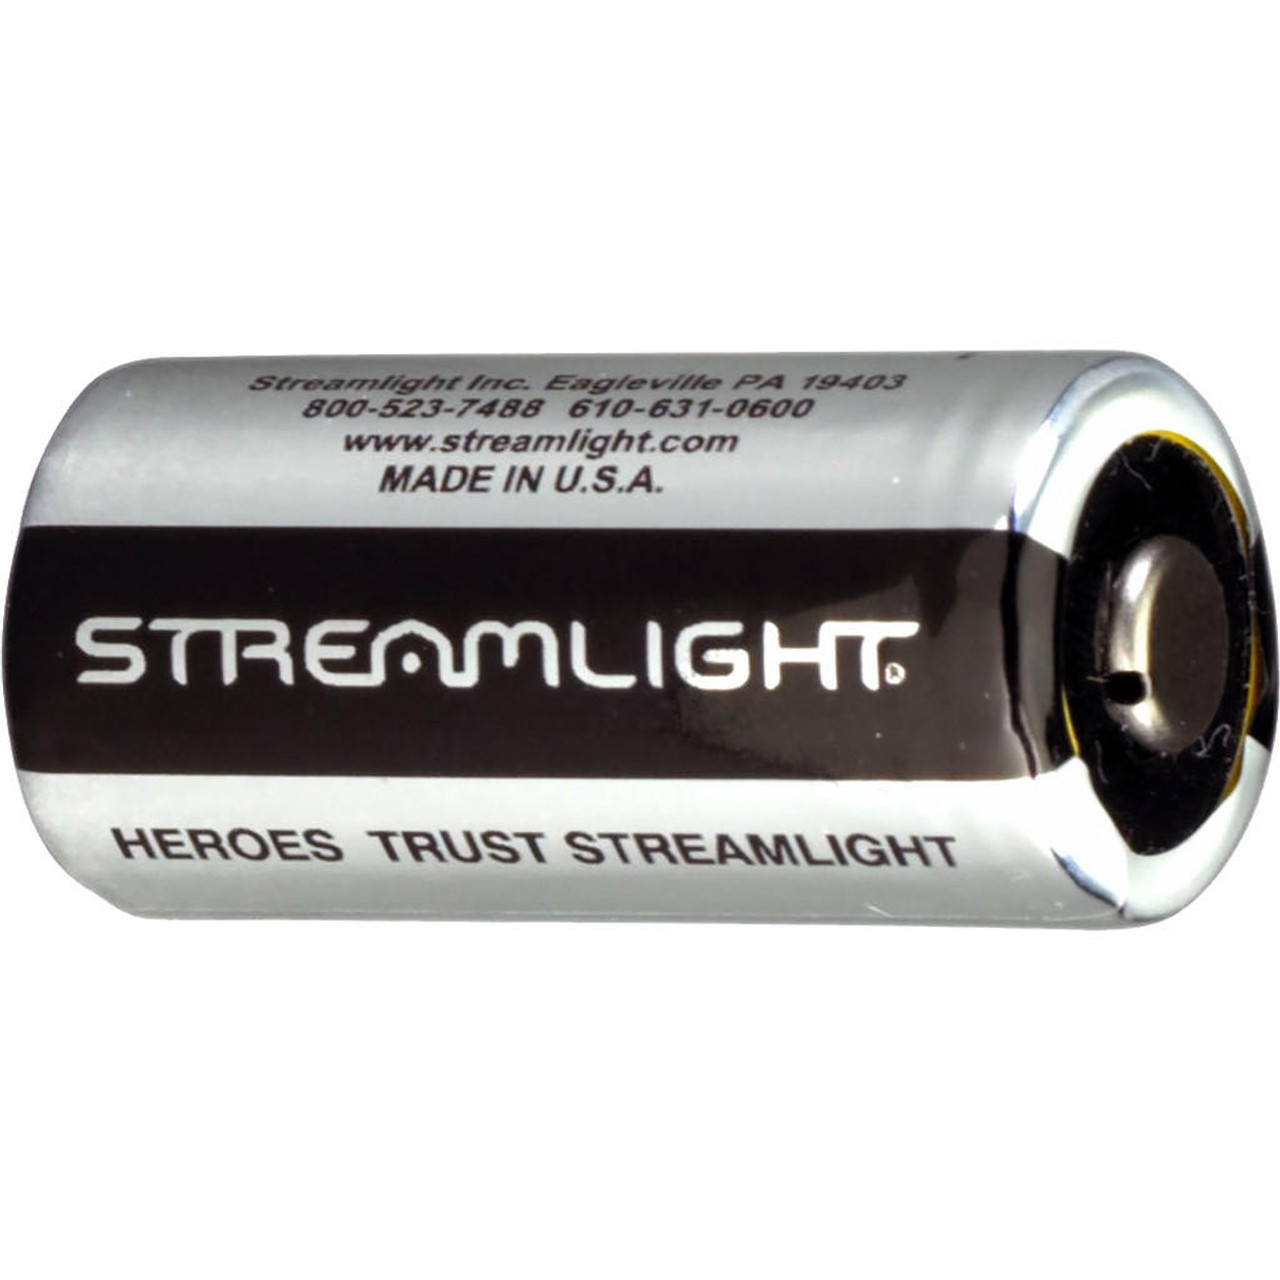 Streamlight CR123A Lithium Batteries